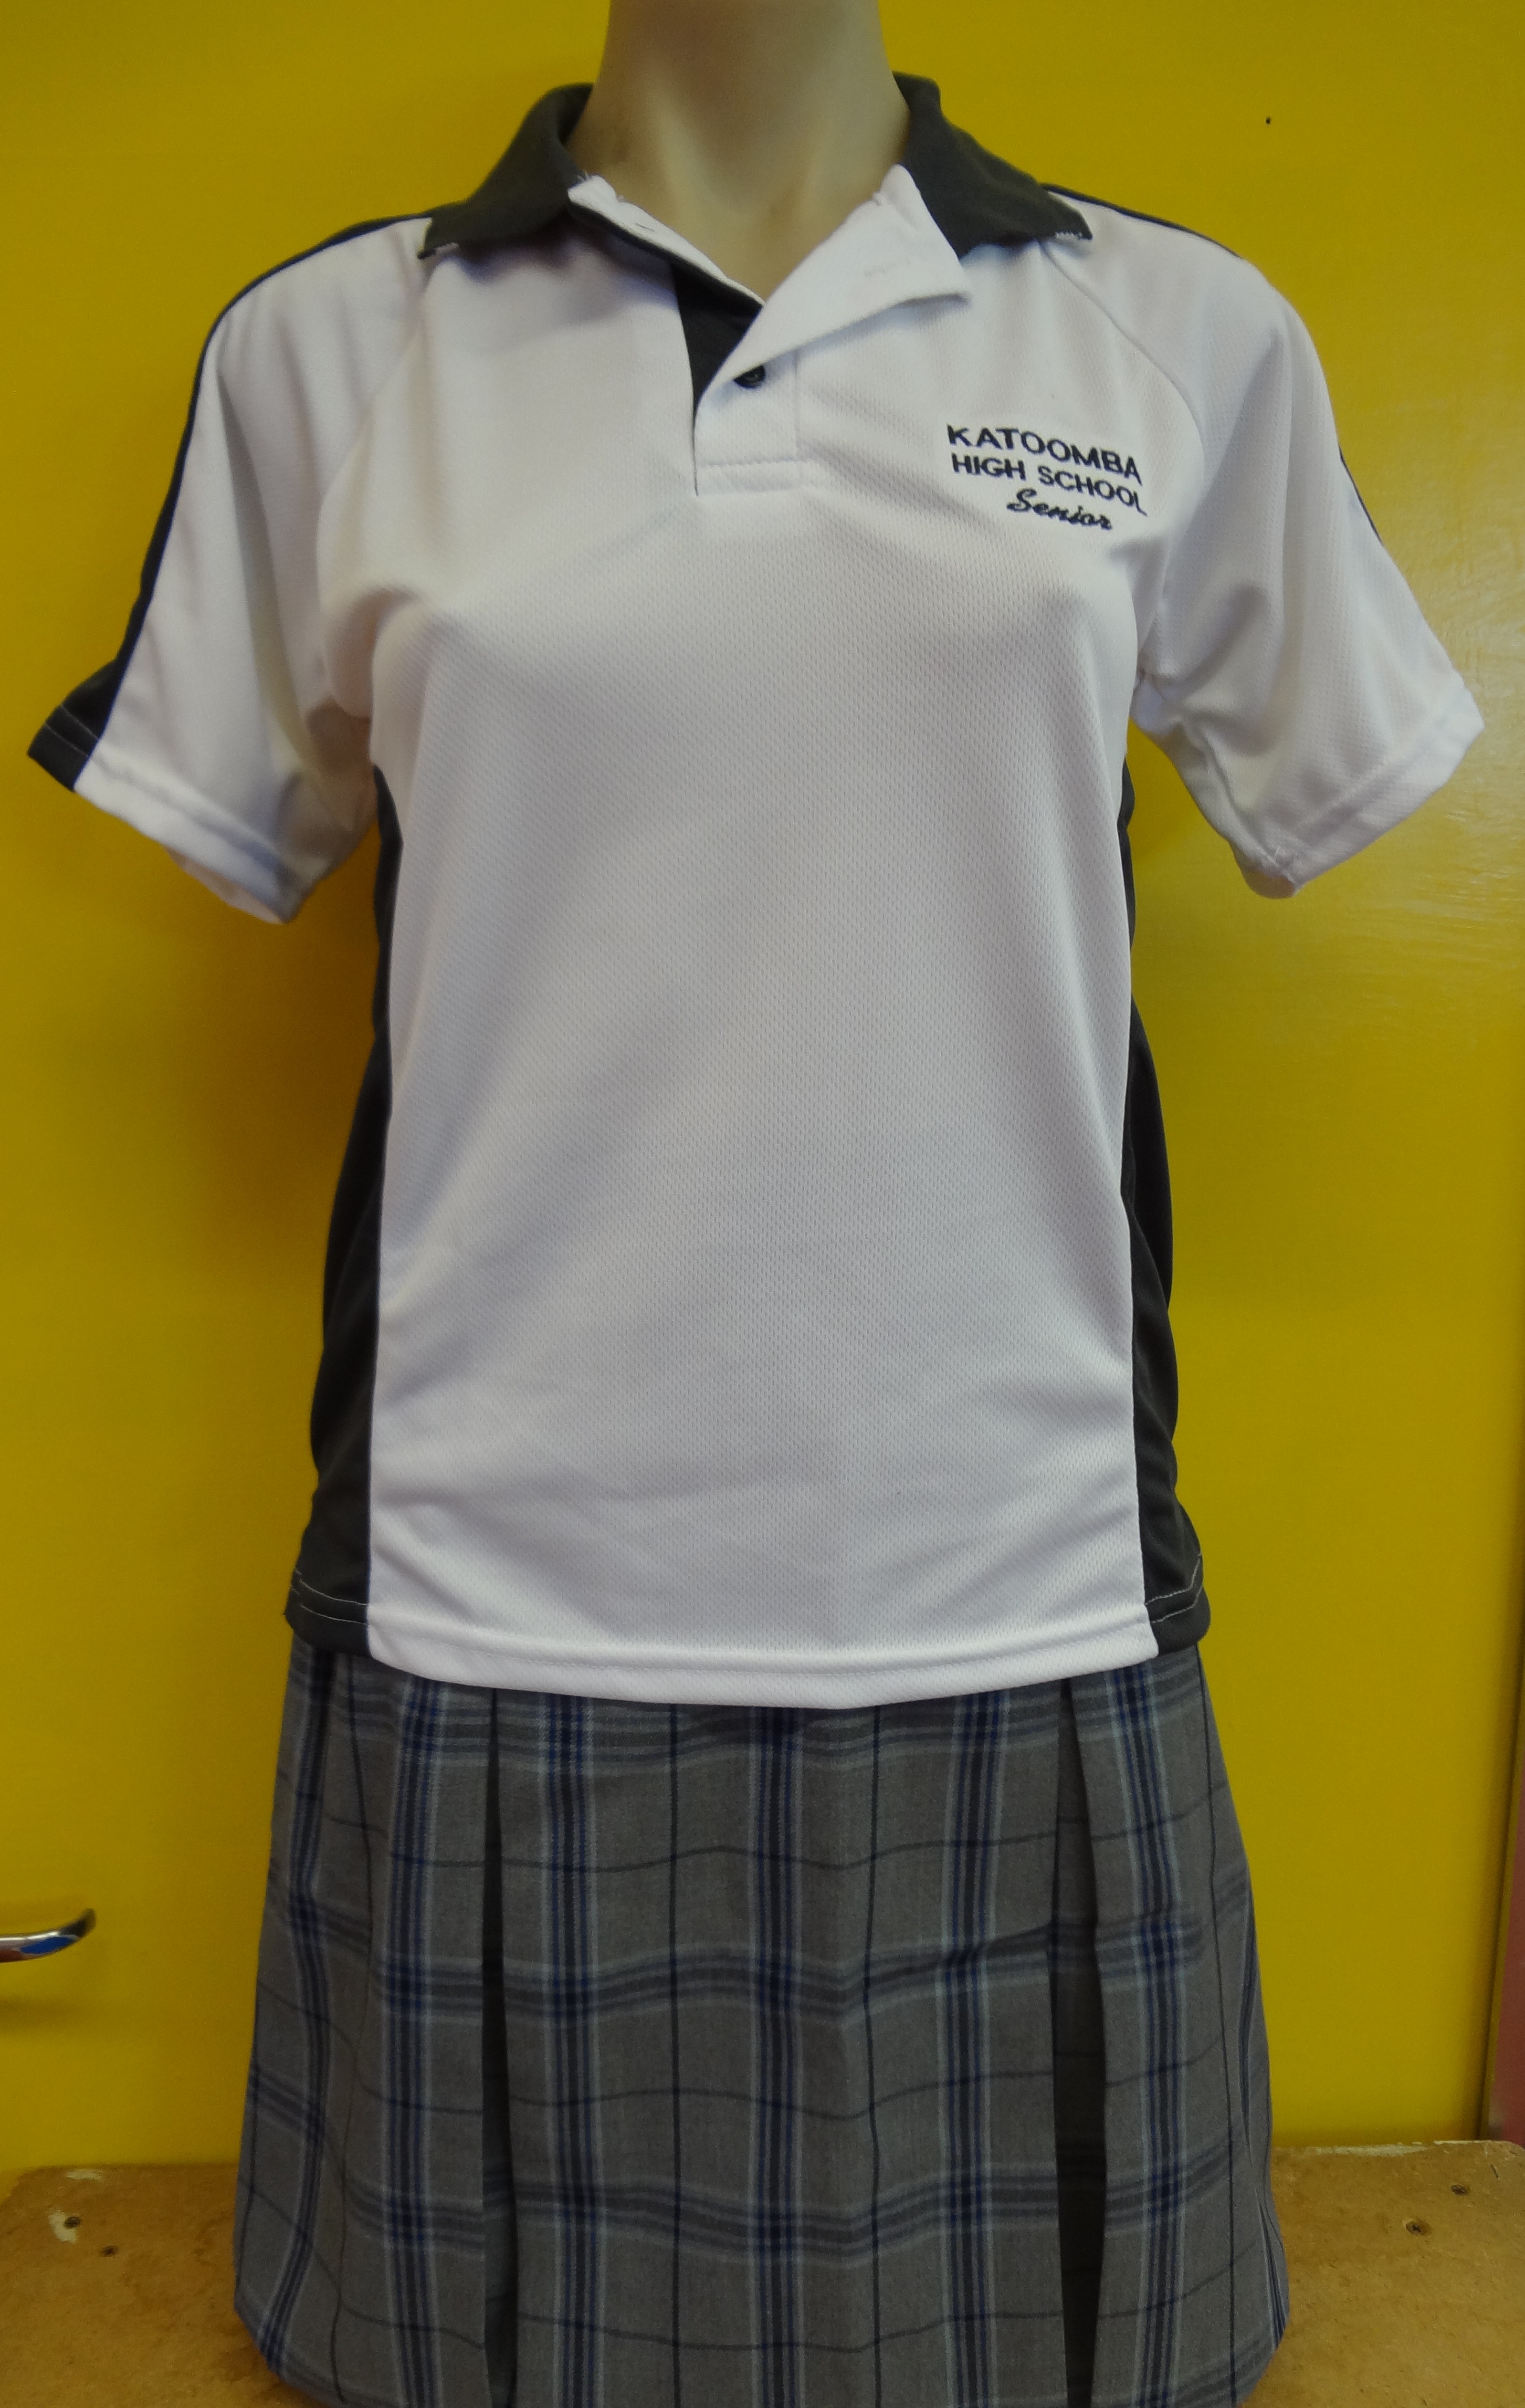 Senior unisex polo shirt and skirt